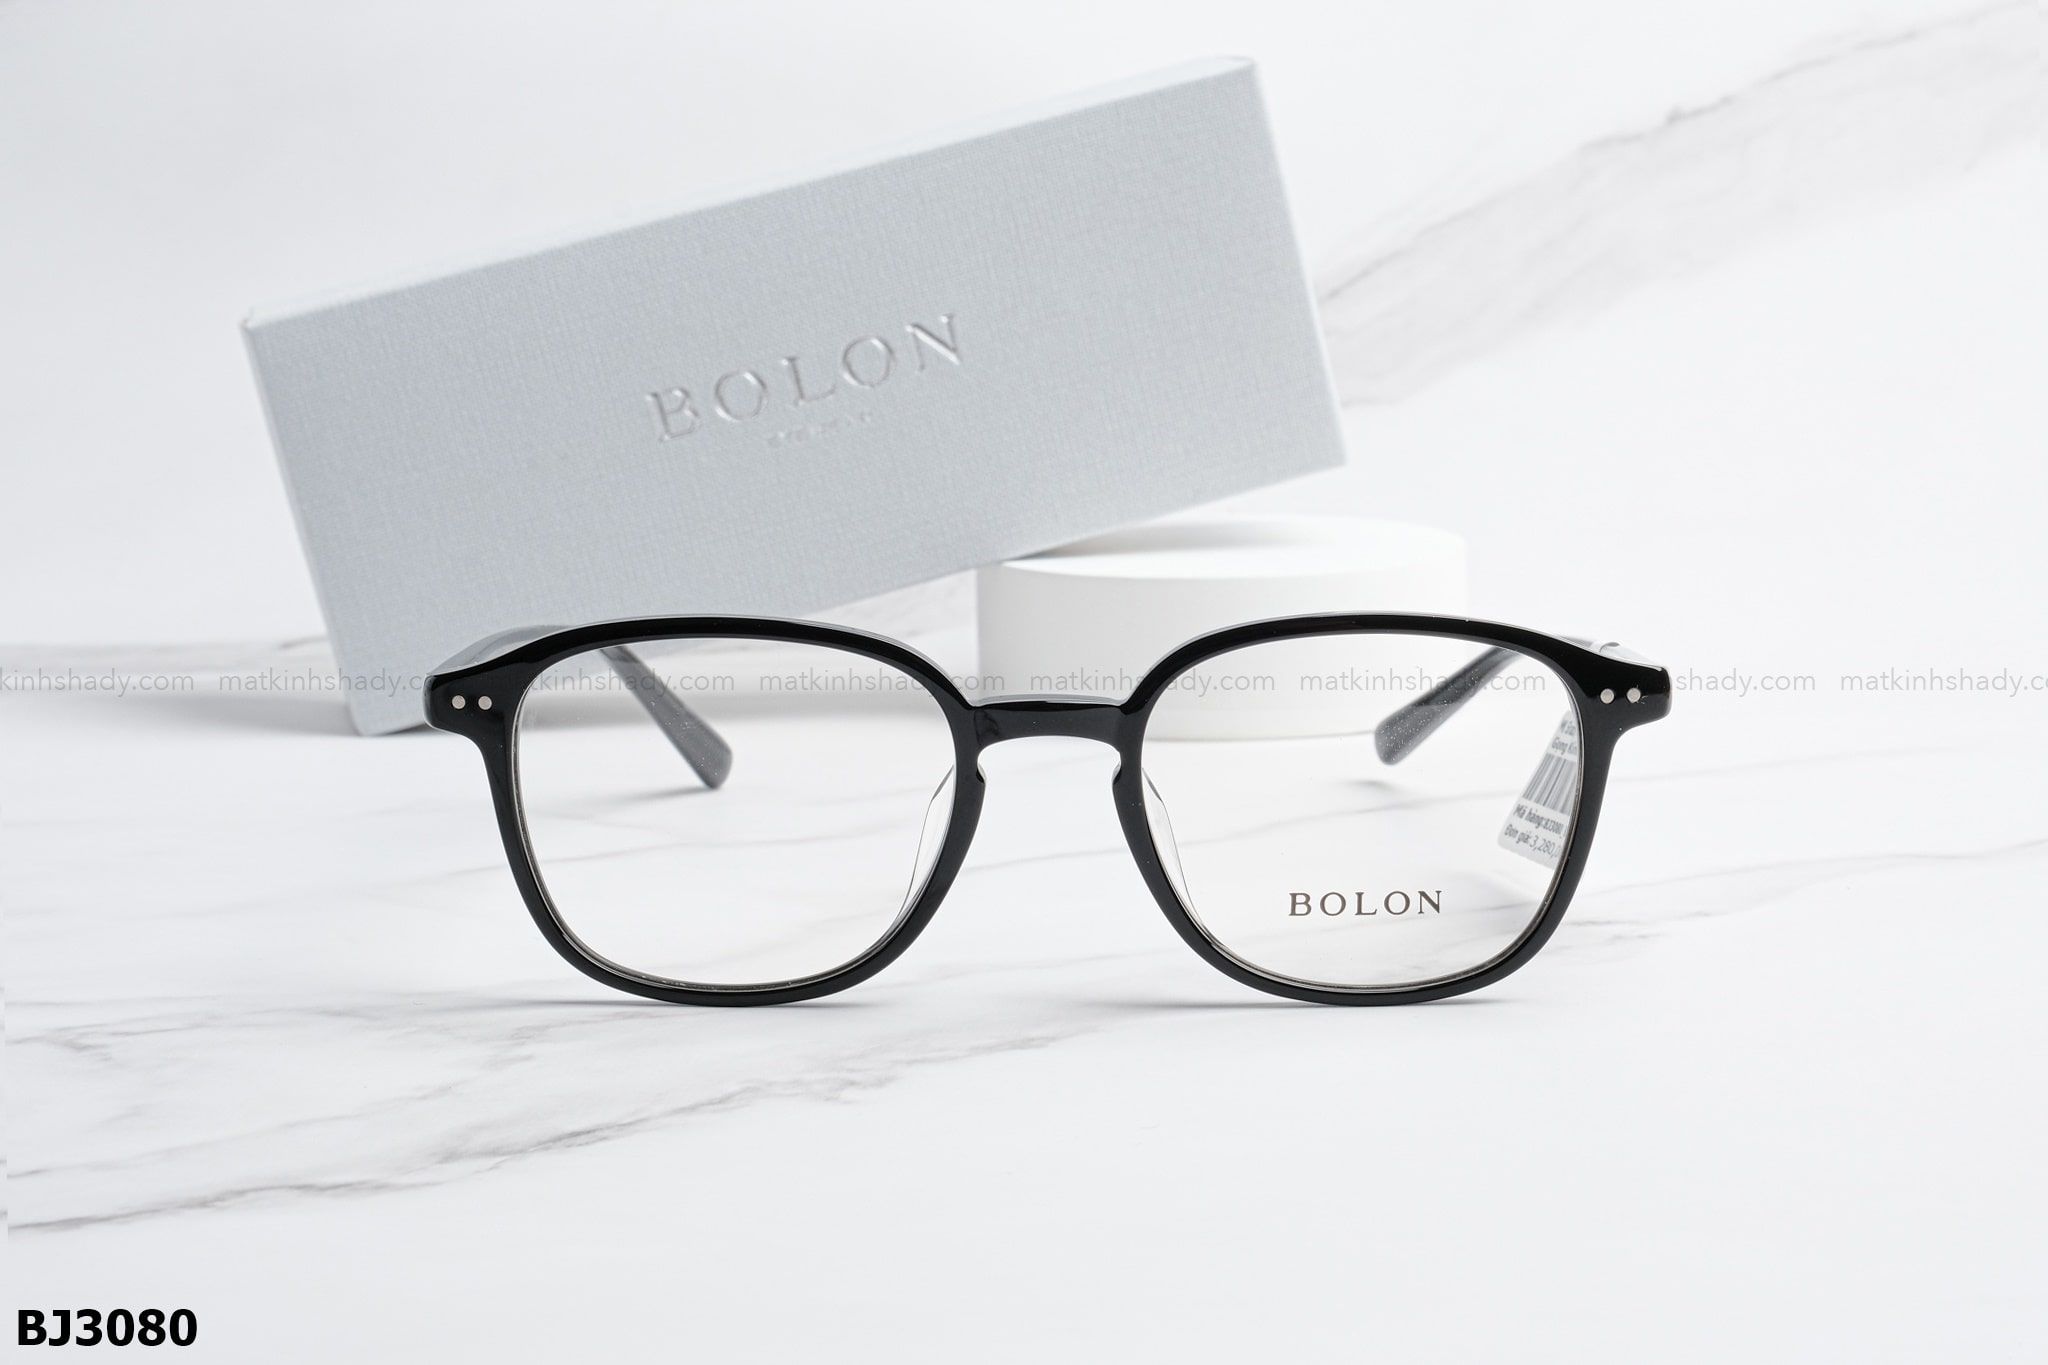  Bolon Eyewear - Glasses - BJ3080 